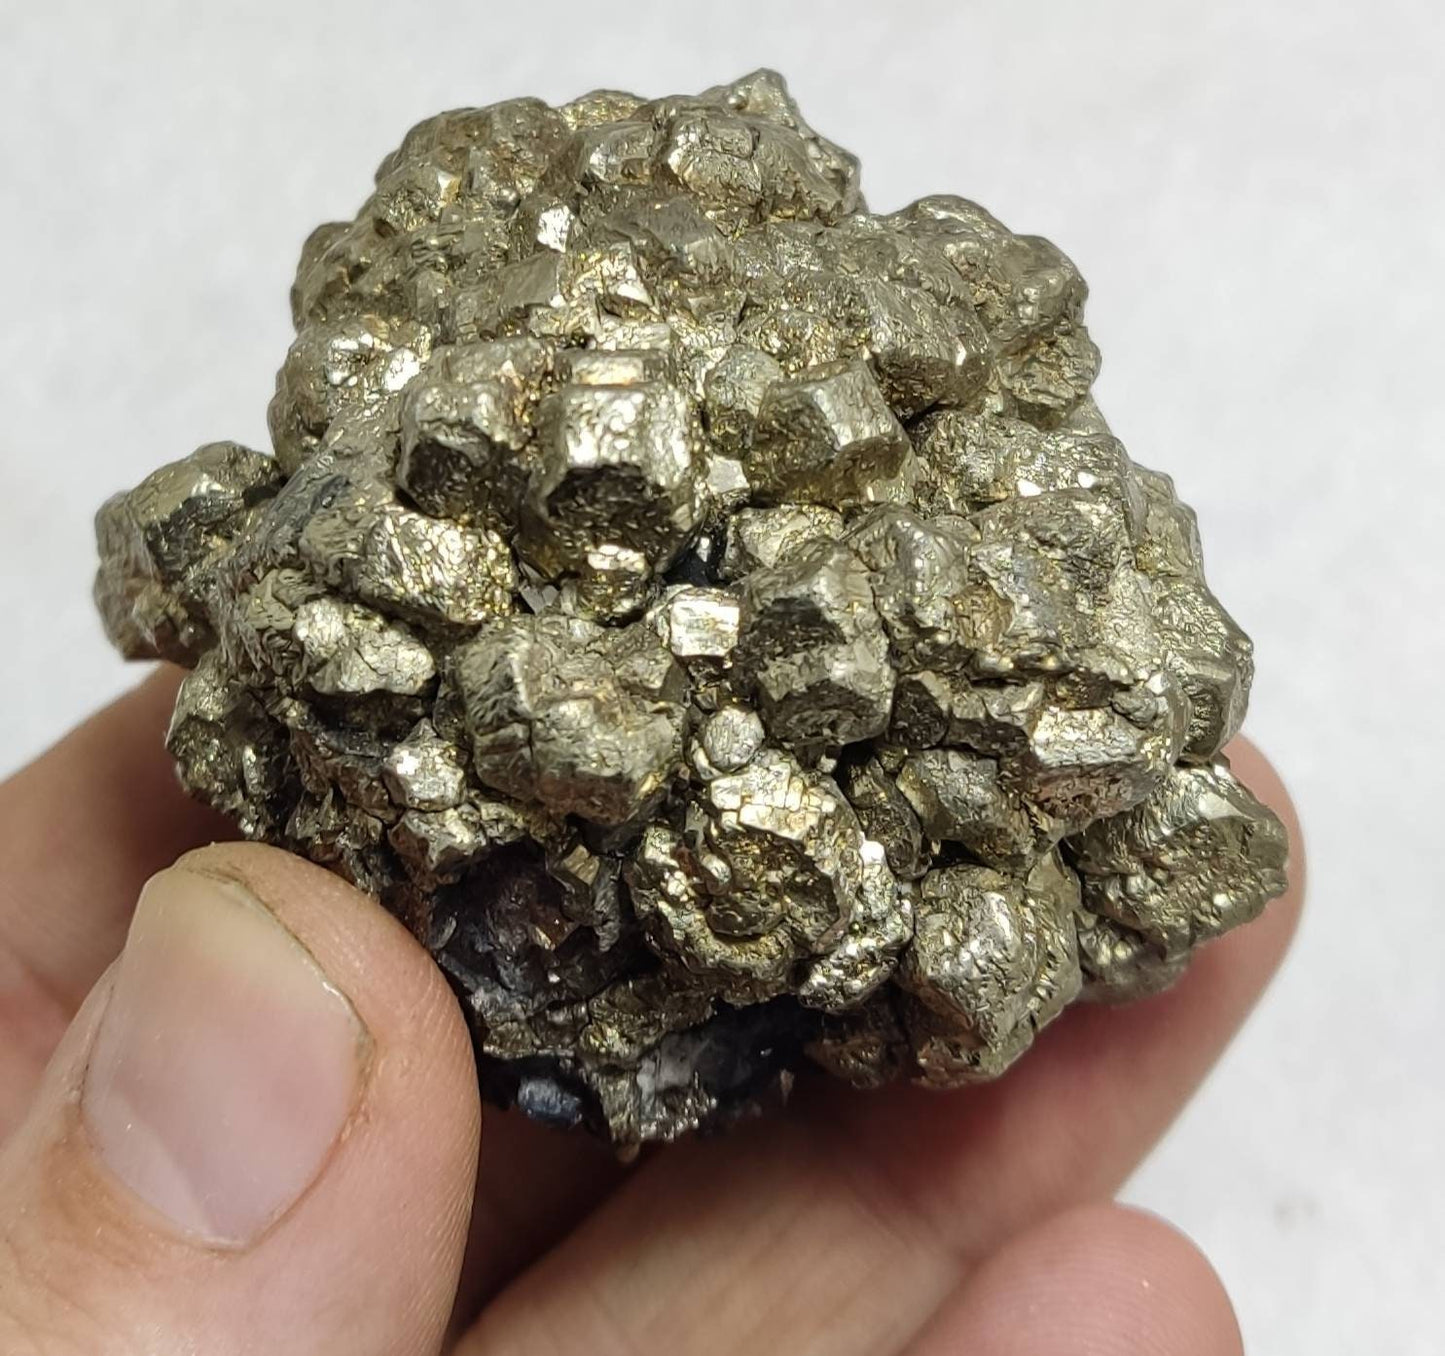 An amazing specimen of pyrite/marcasite 246 grams